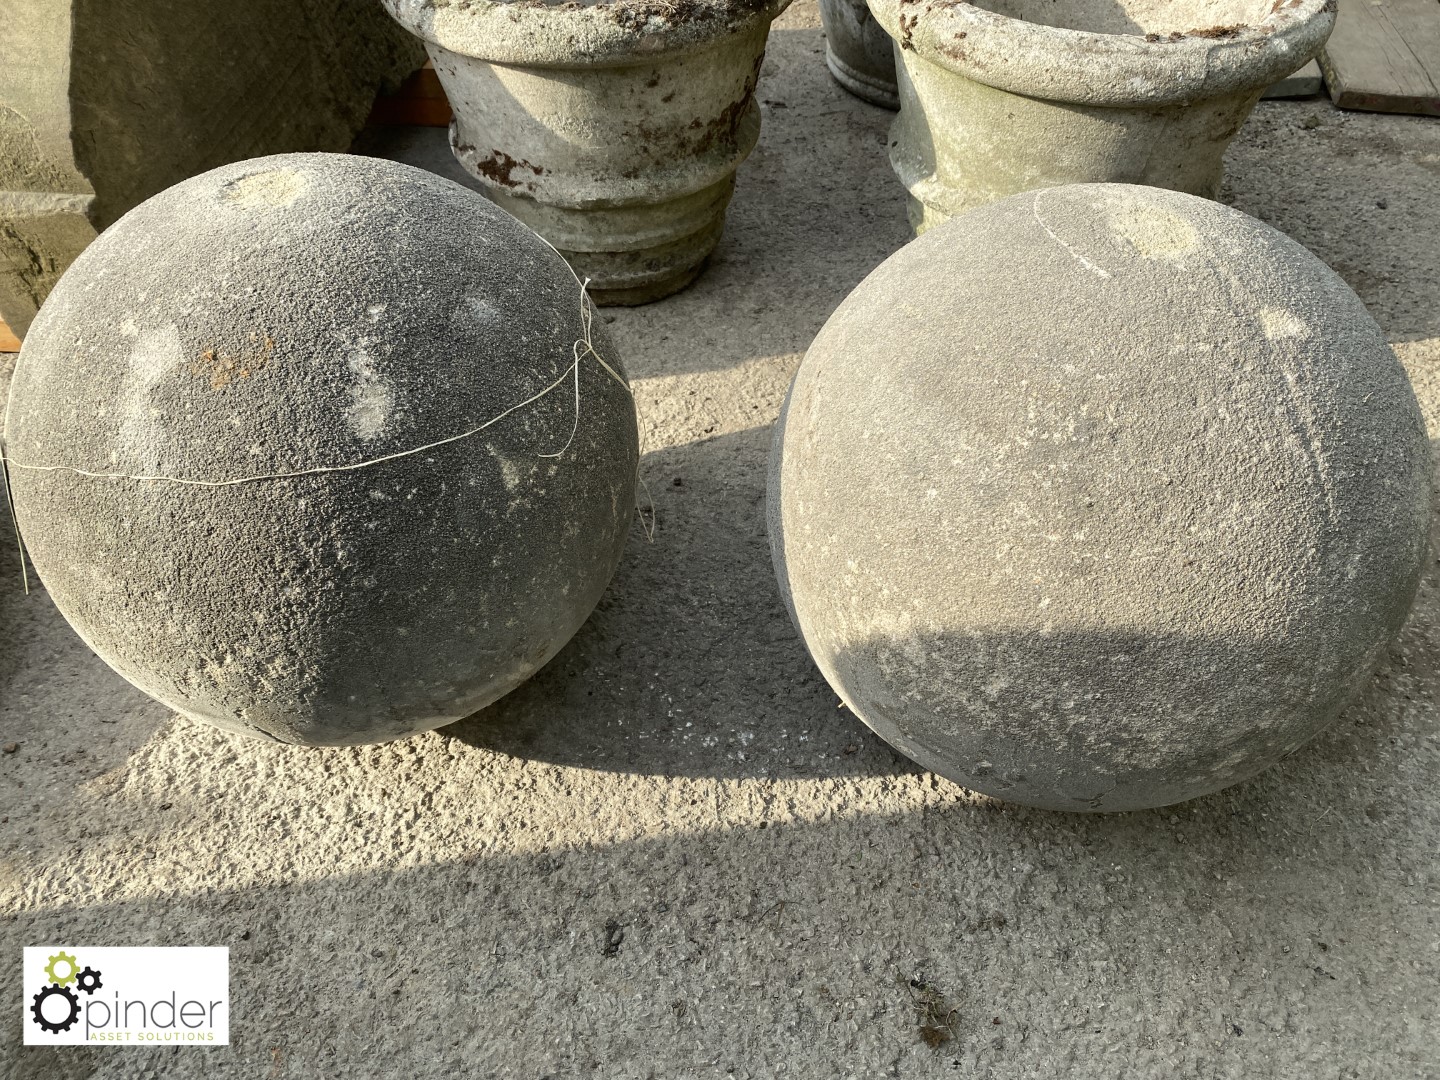 Pair of reconstituted stone Balls, approx. 16in diameter